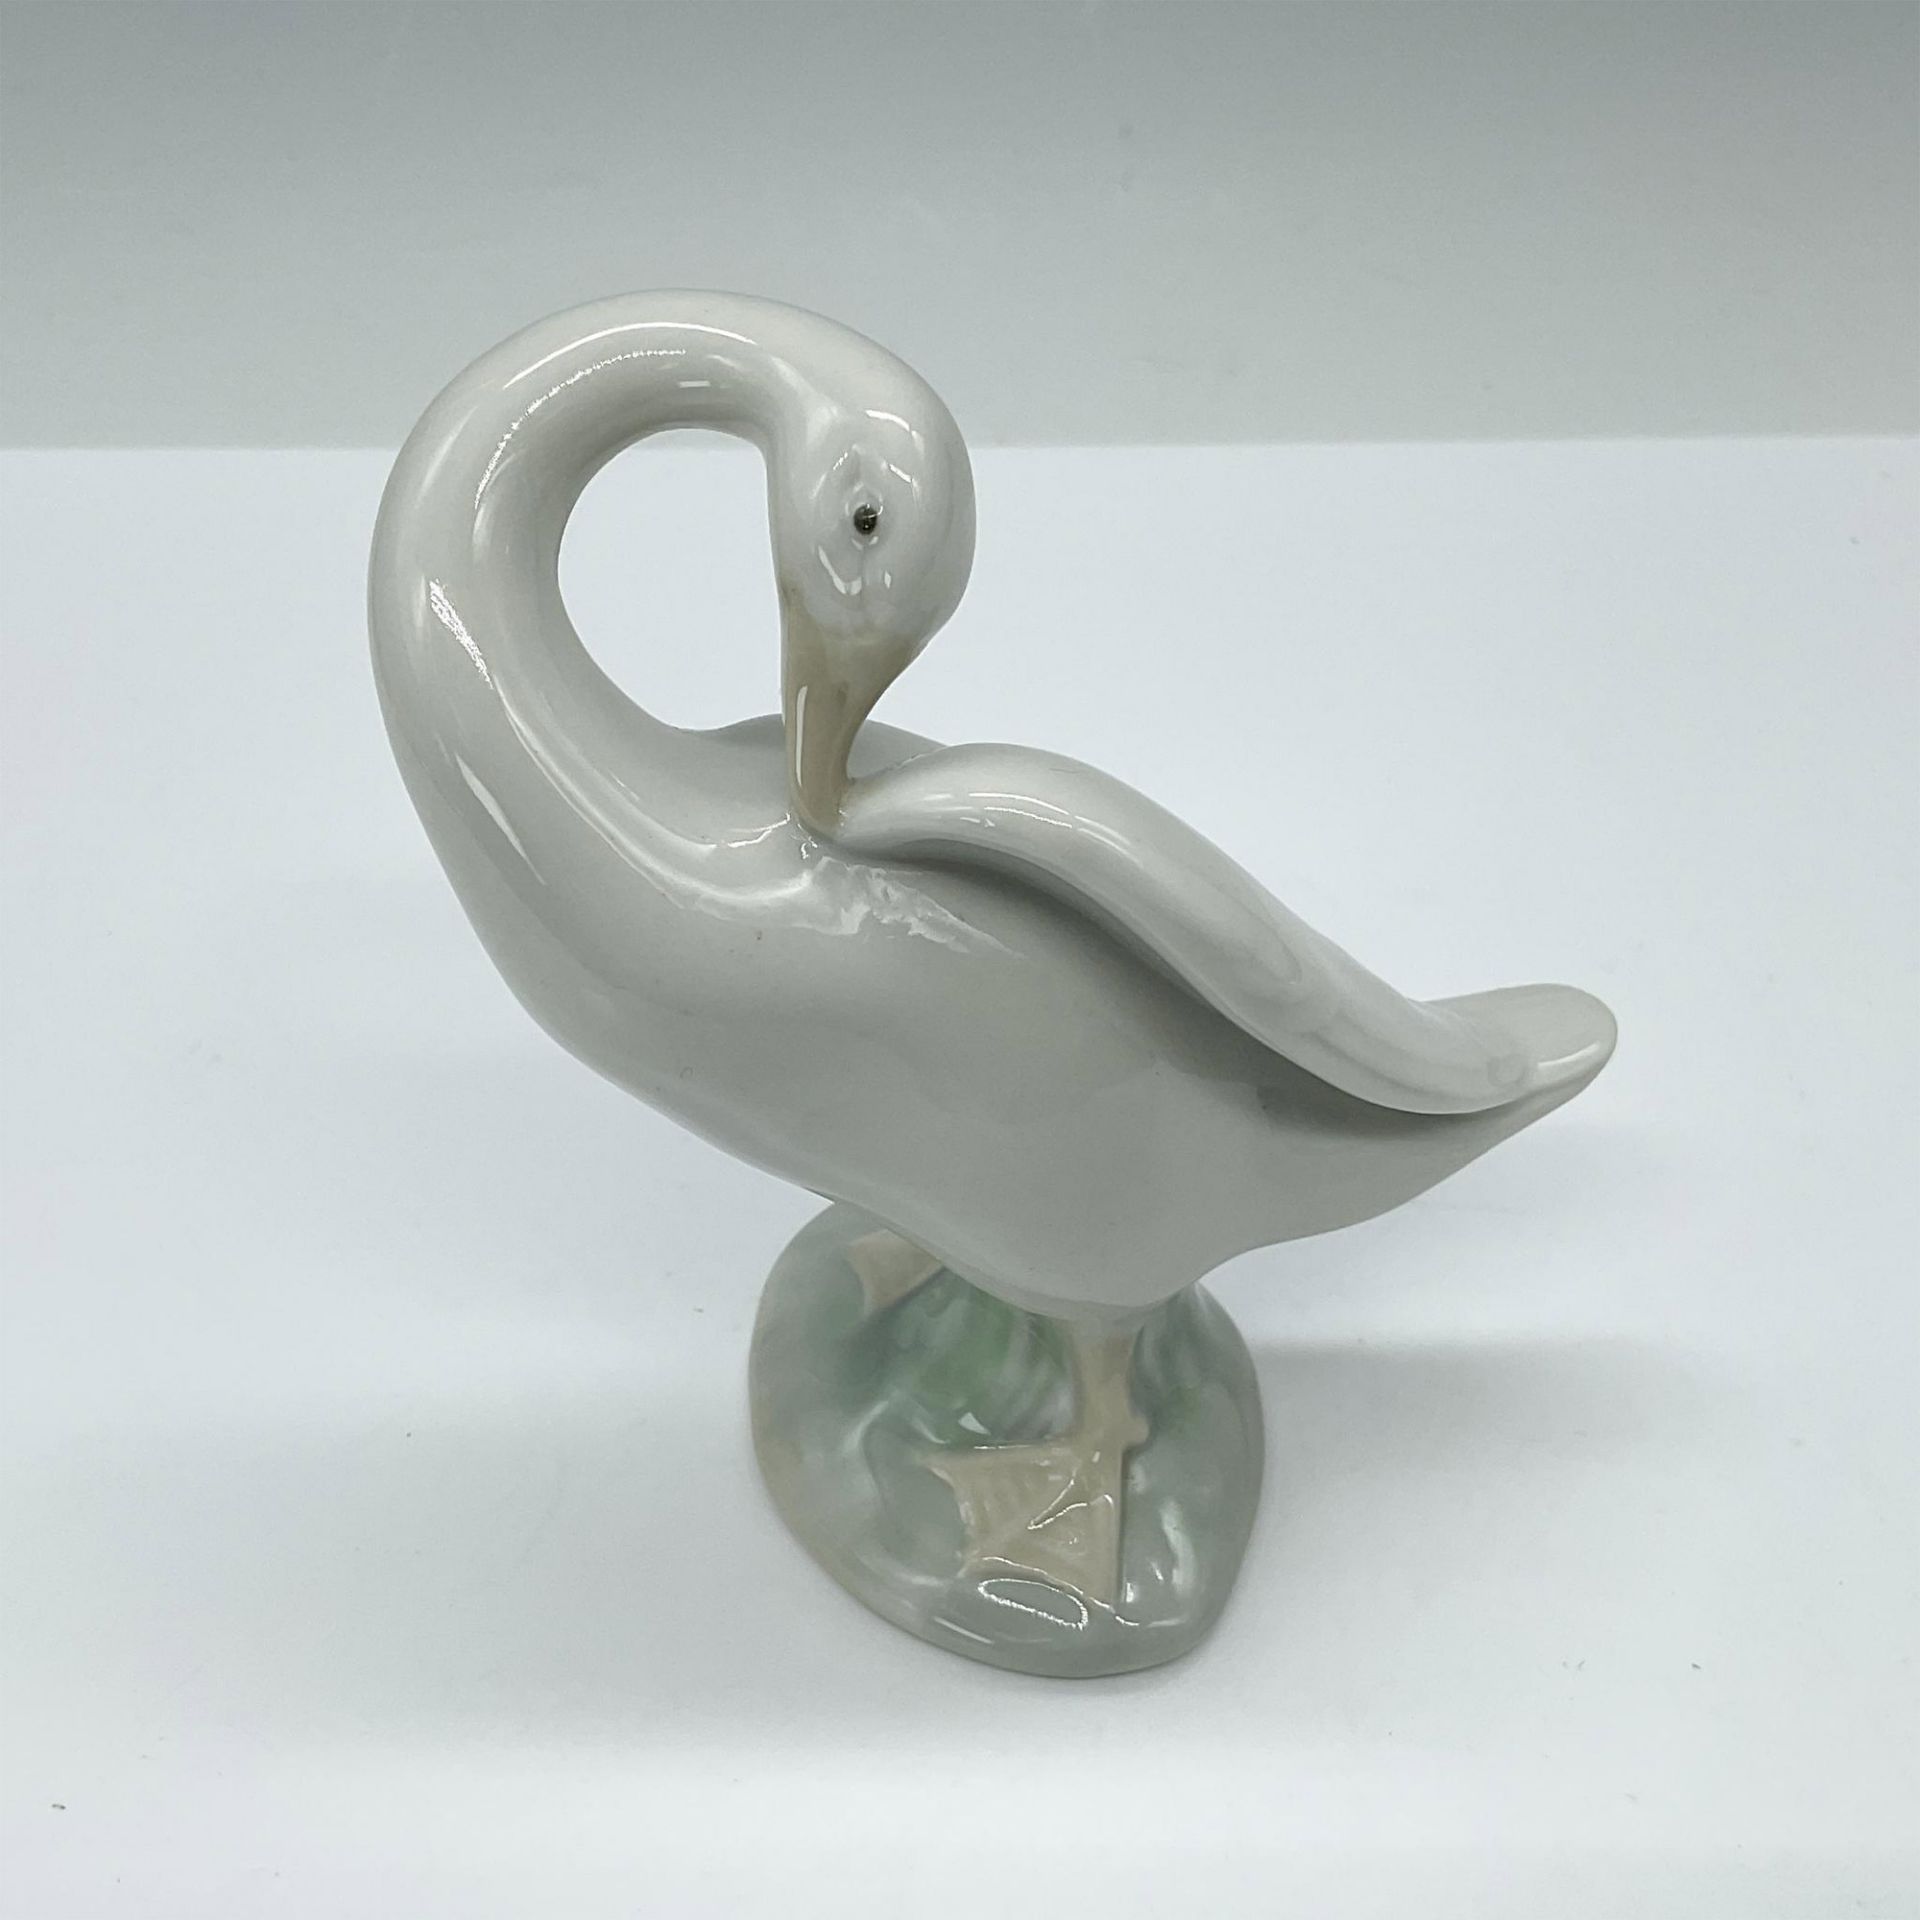 Little Duck 1004553 - Lladro Porcelain Figurine